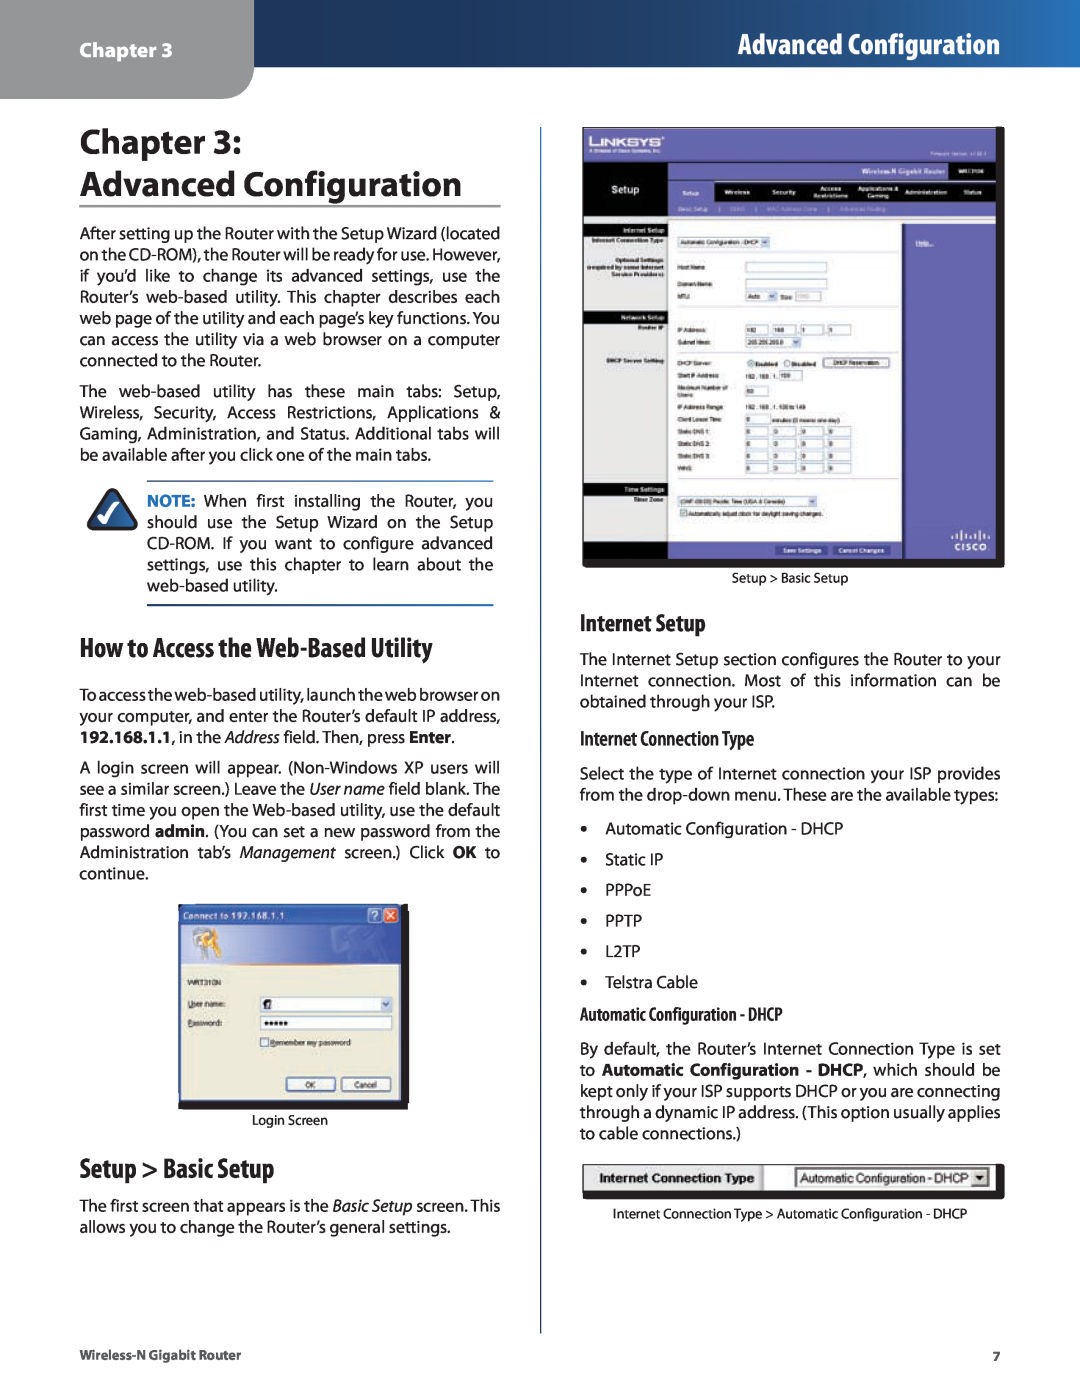 Linksys WRT310N Chapter Advanced Configuration, How to Access the Web-Based Utility, Setup Basic Setup, Internet Setup 